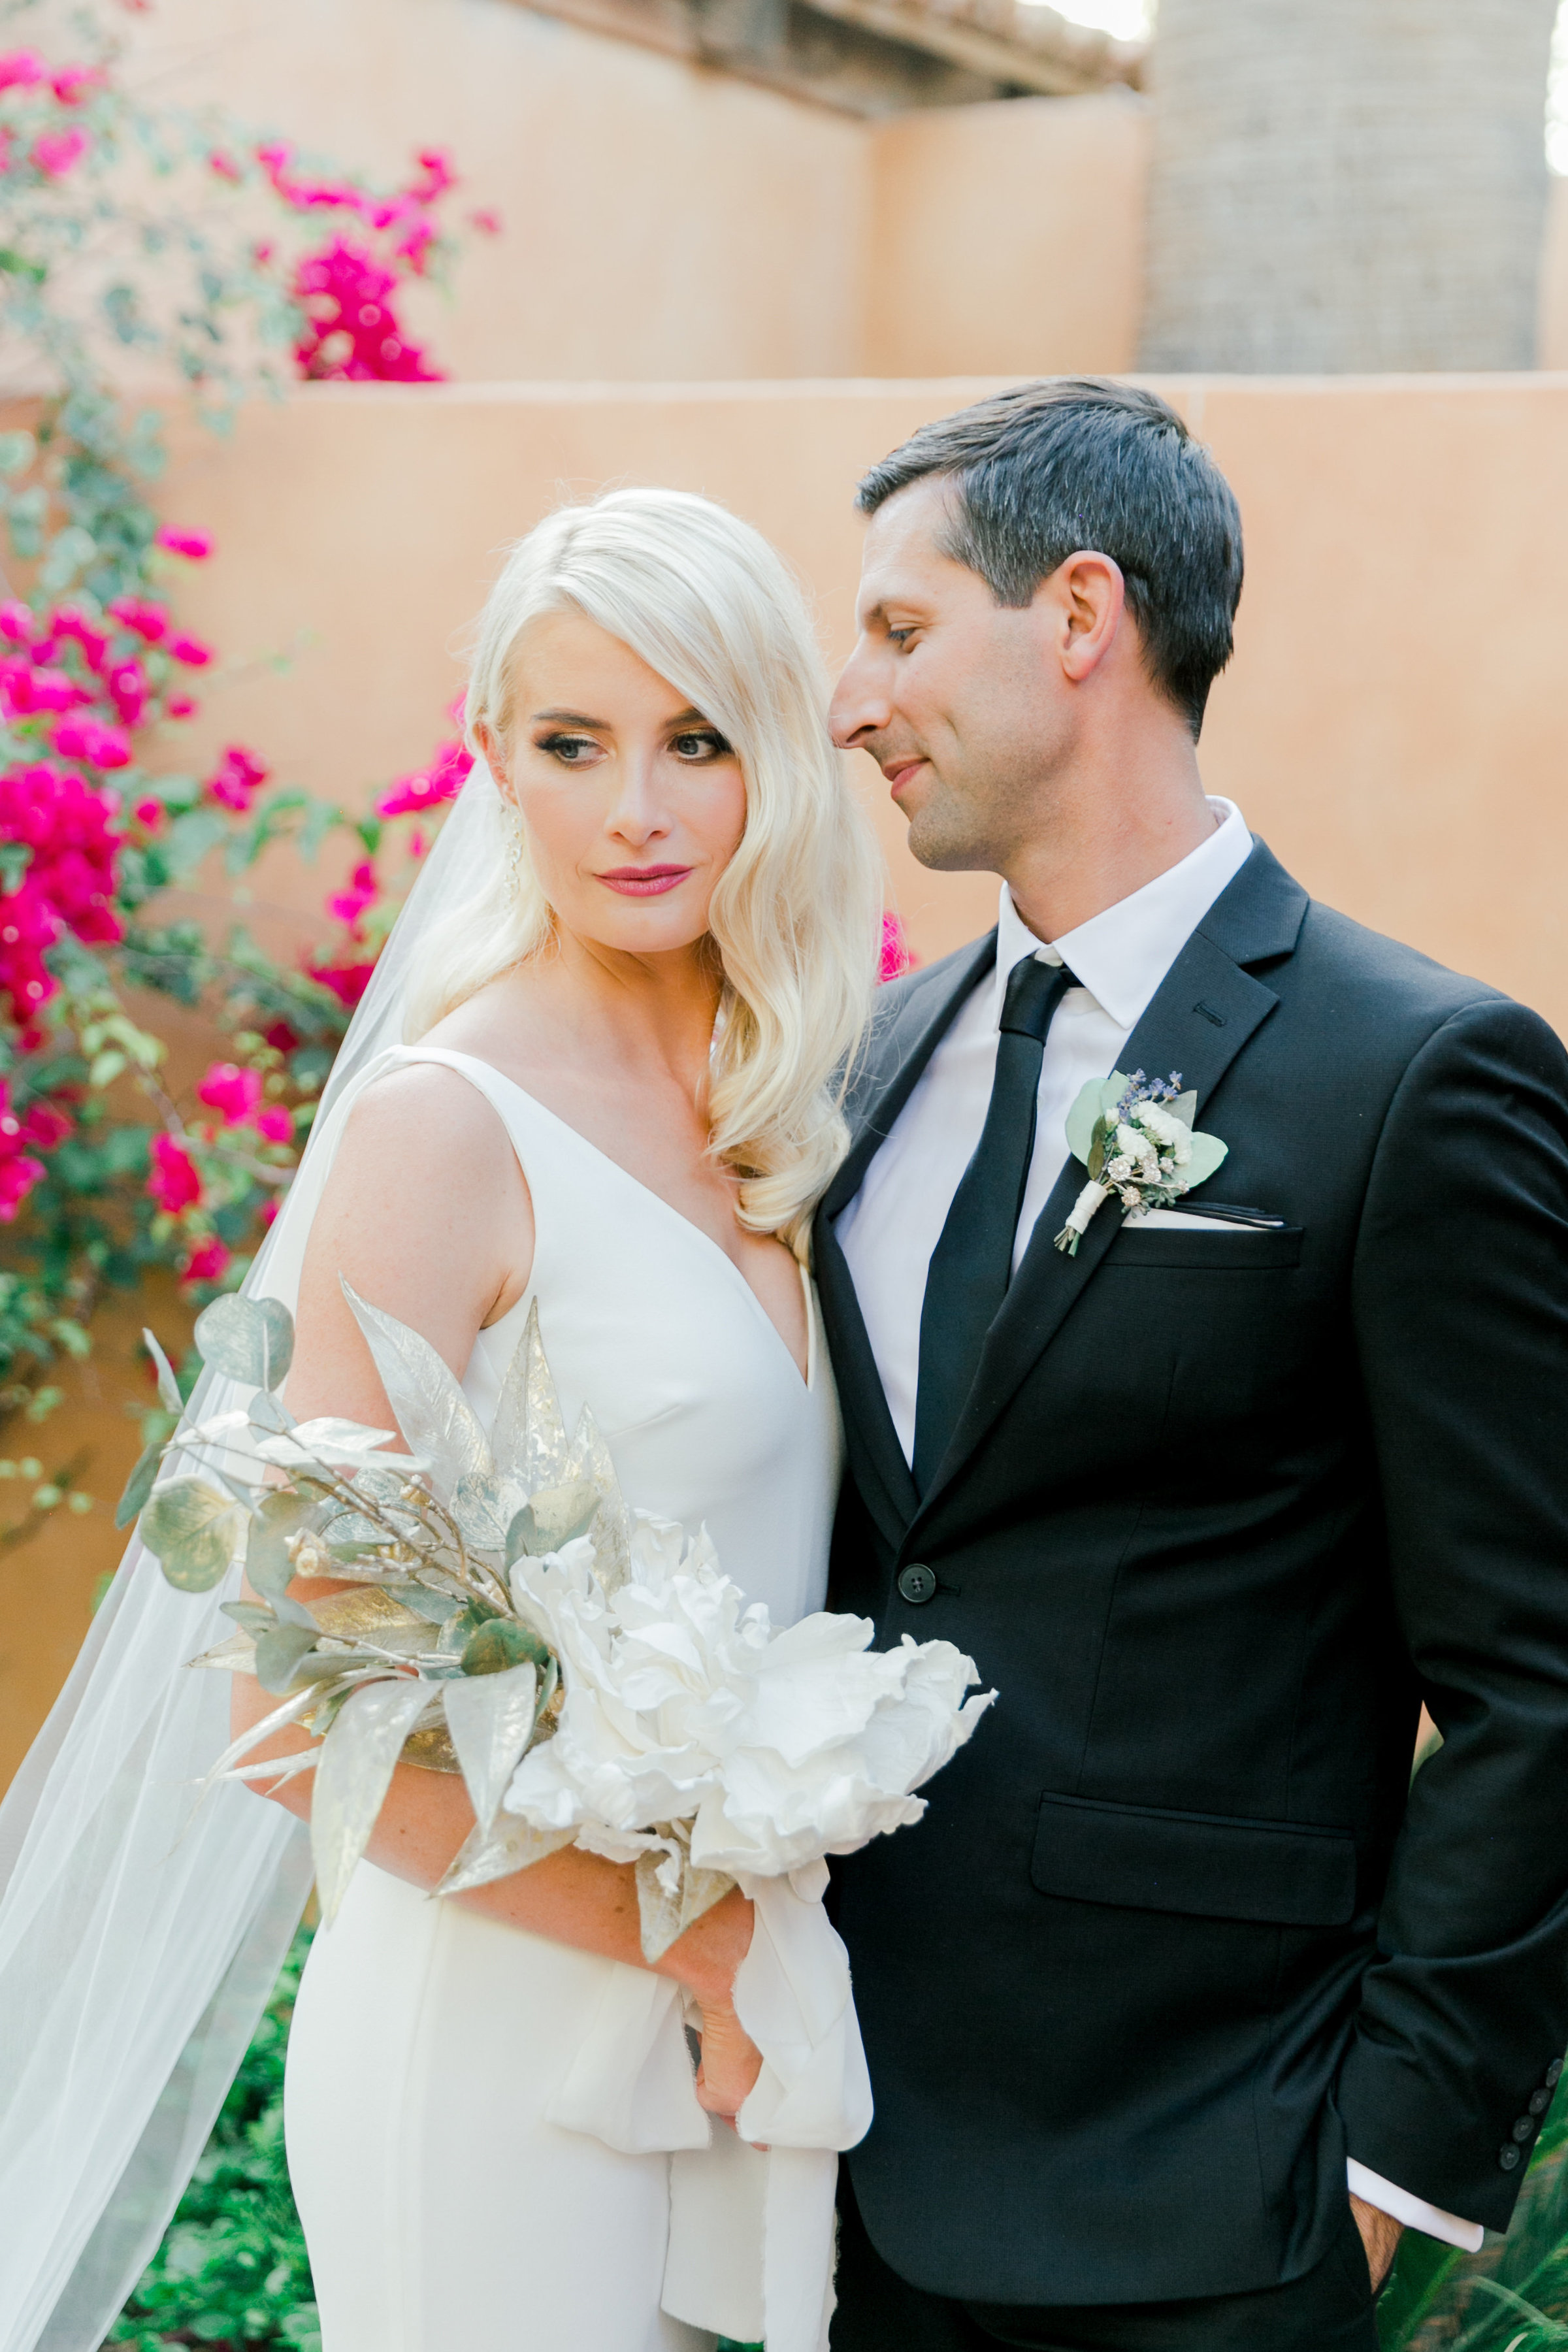 Karlie Colleen Photography - Arizona Wedding - Royal Palms Resort- Alex & Alex-113